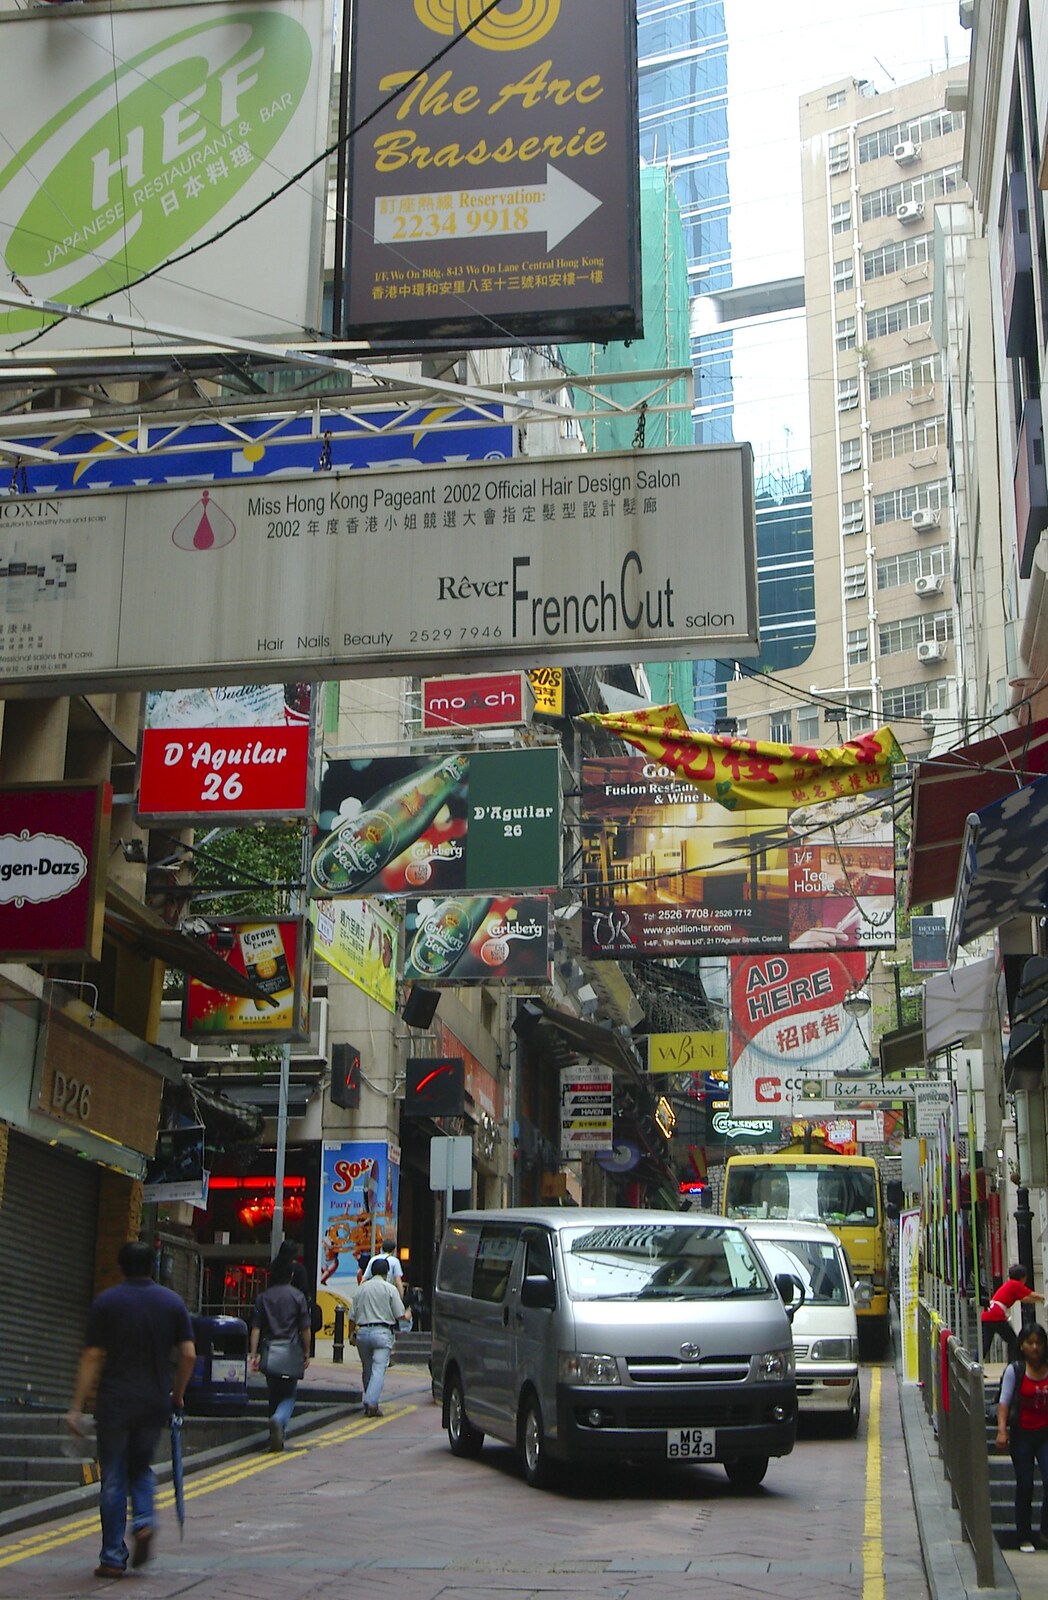 Sign-tastic street from Wan Chai and Central, Hong Kong, China - 2nd October 2006